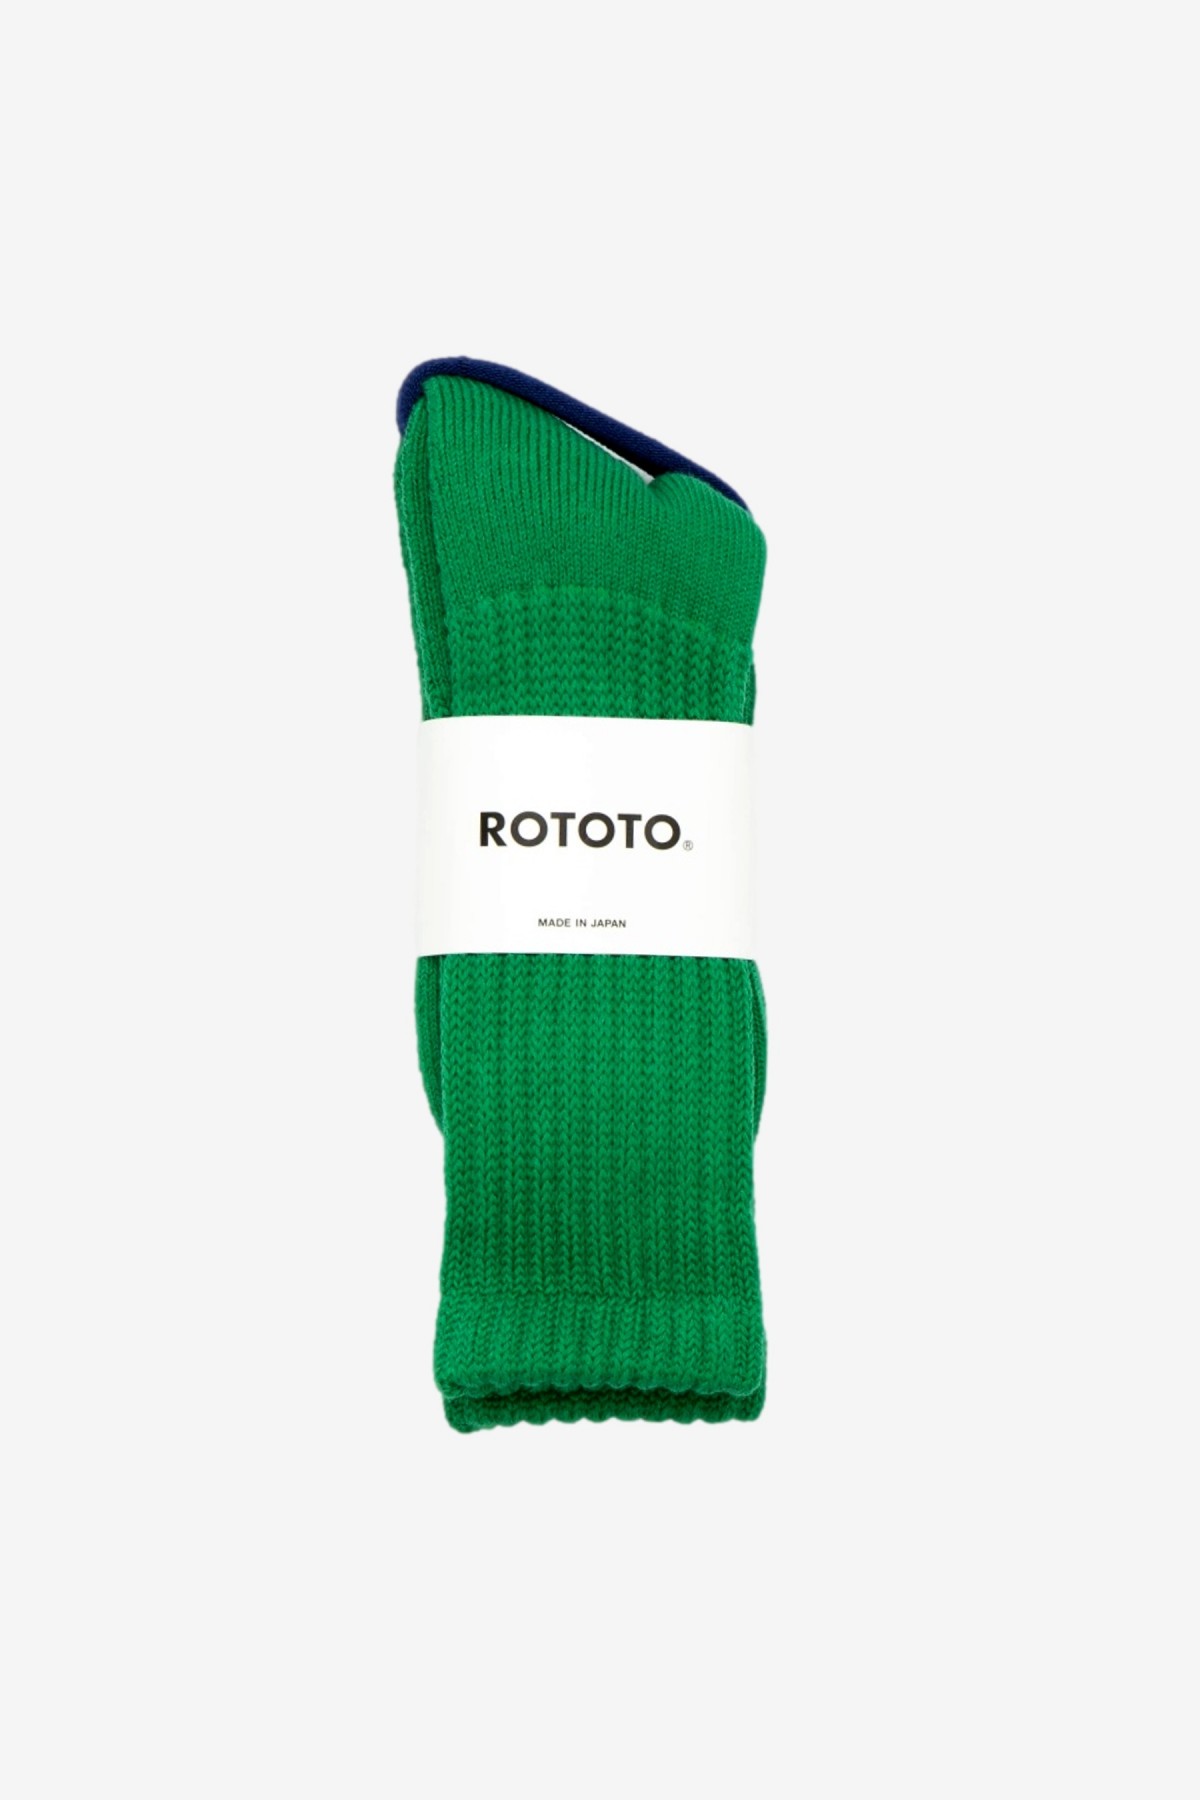 RoToTo Loose Pile Socks in Green